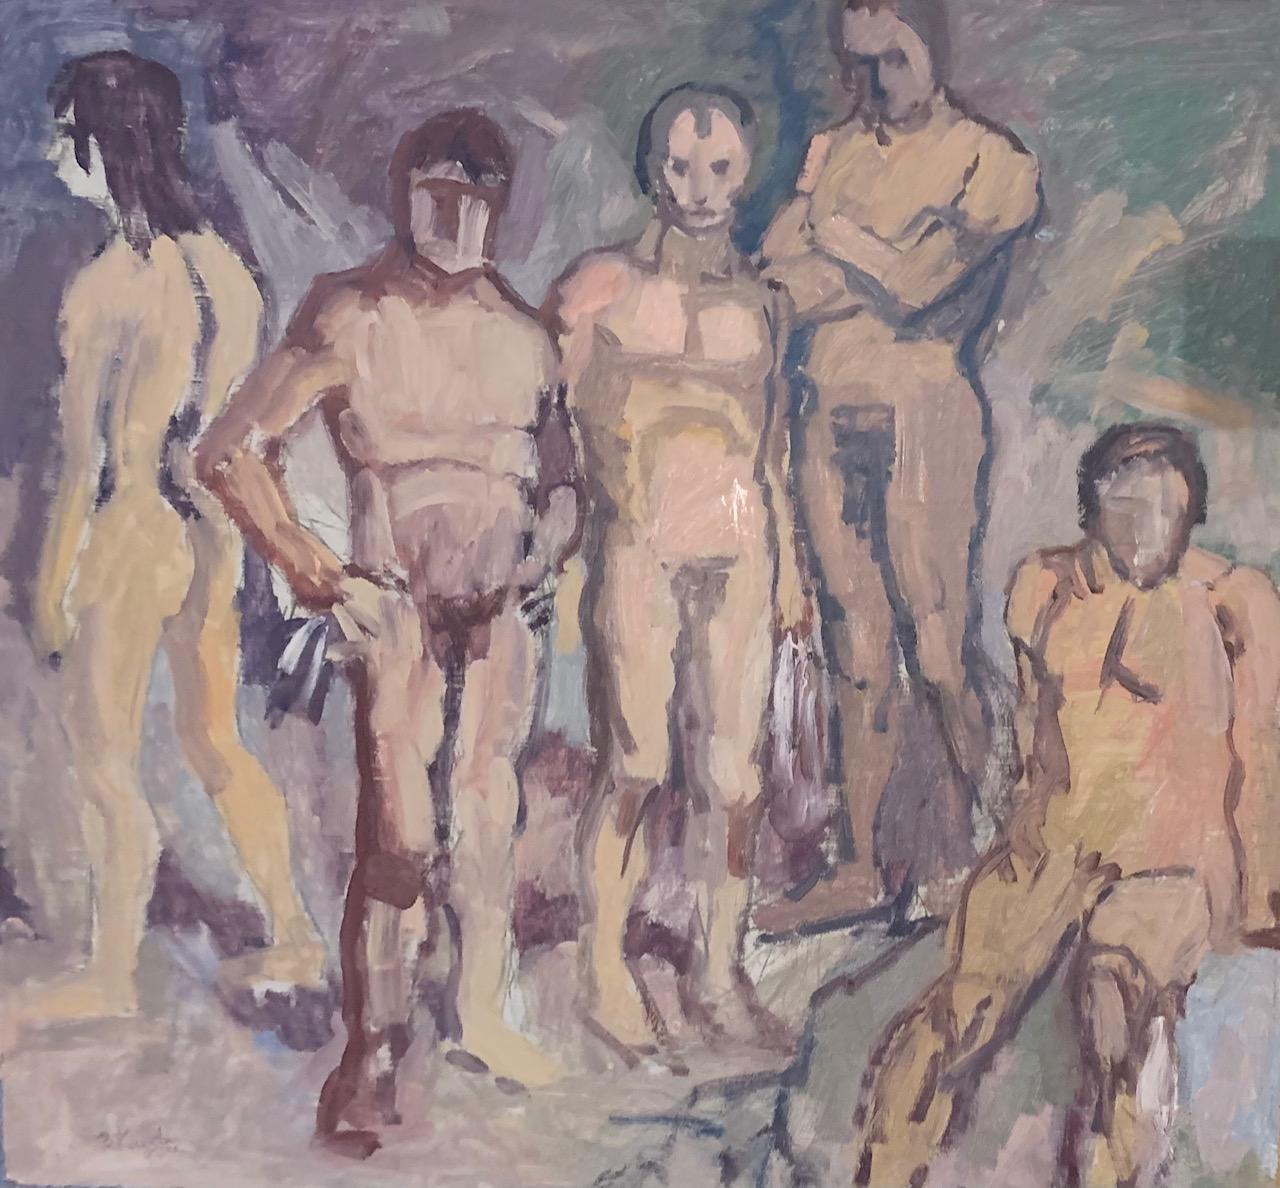 Bernard Krigstein Nude Painting - 'The Bathers' Original Figurative Young Nude Men  Ashcan School Movement O/B